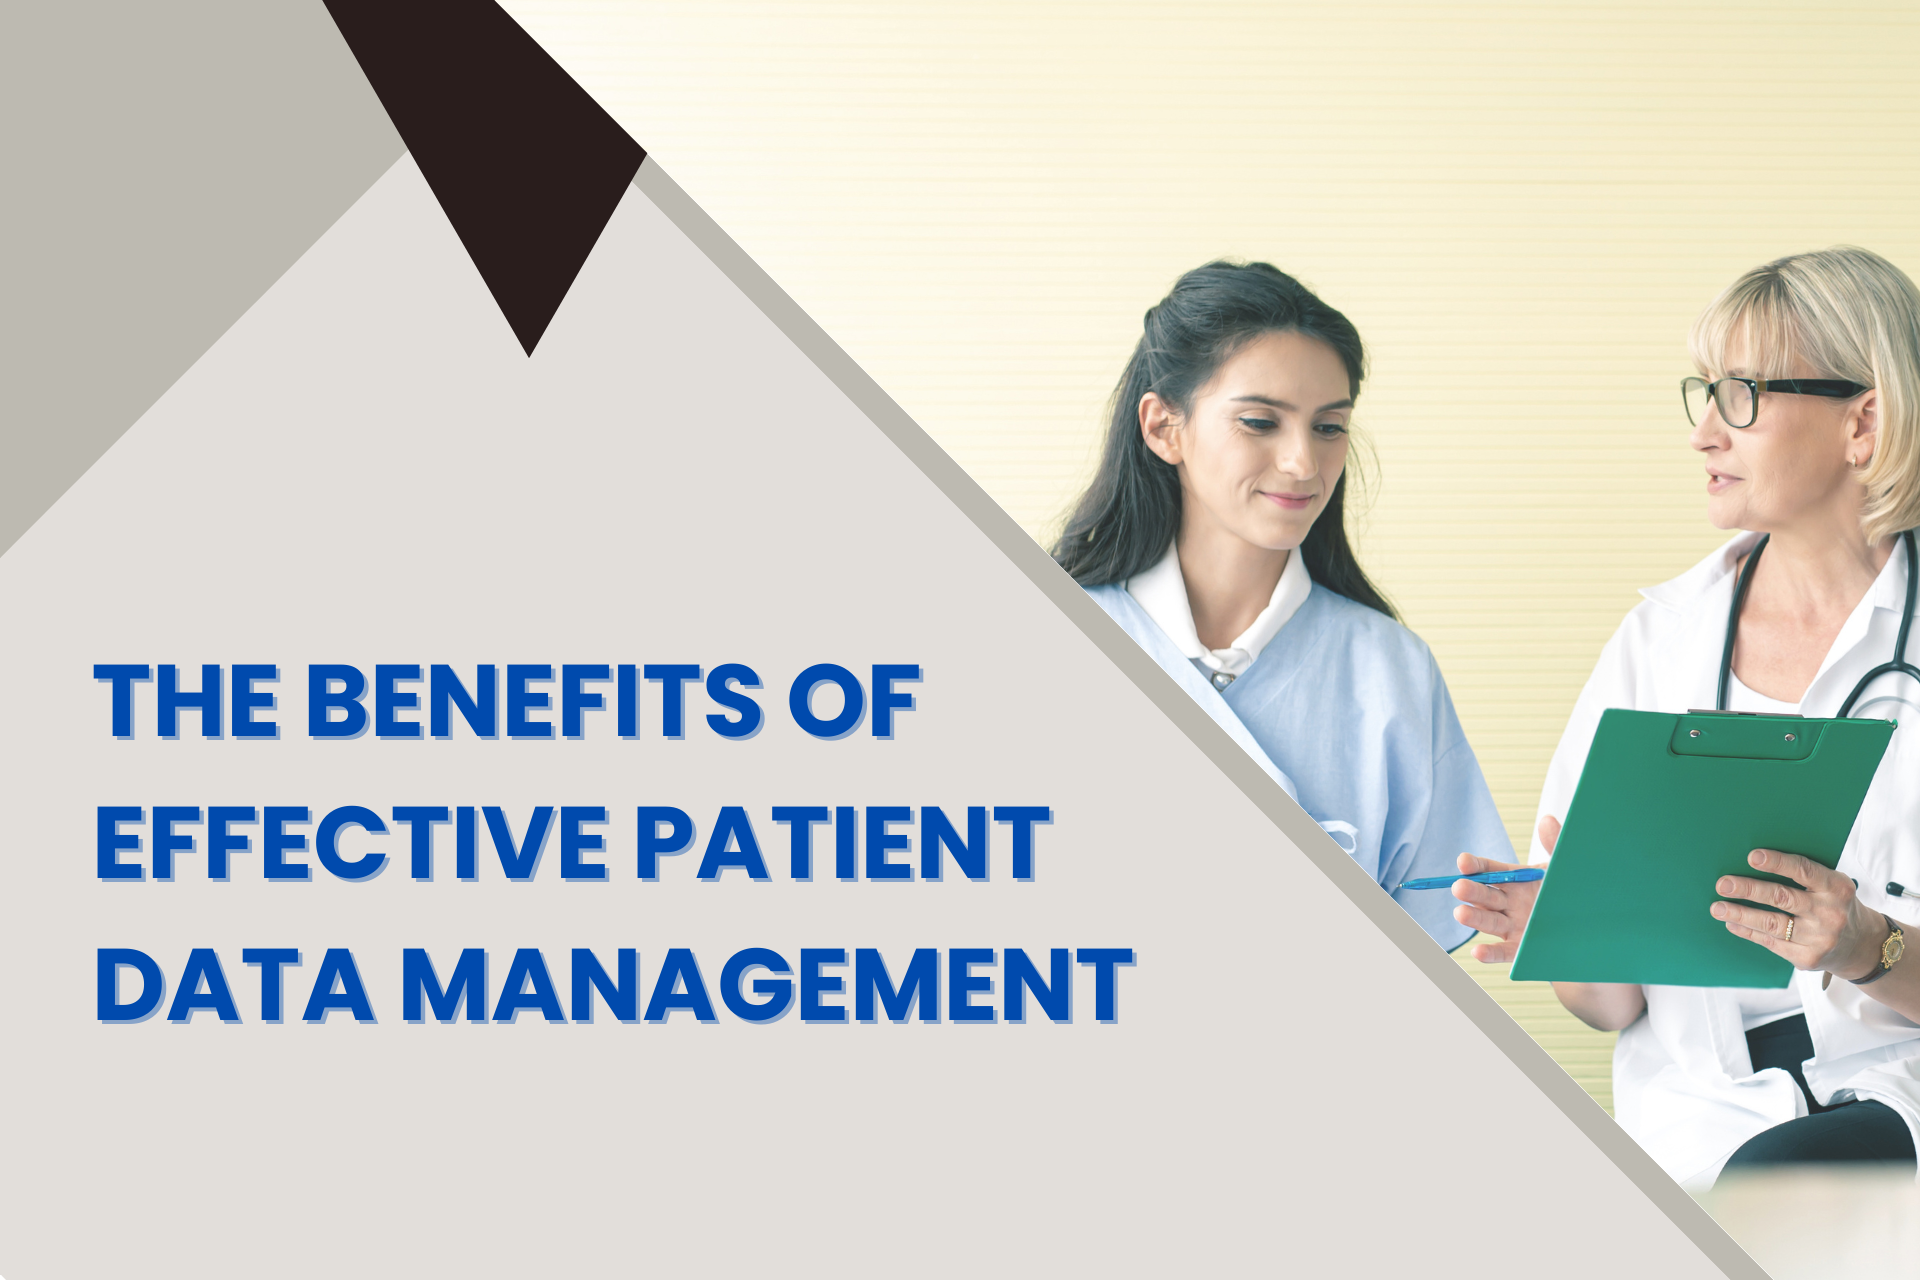 The Benefits of Effective Patient Data Management